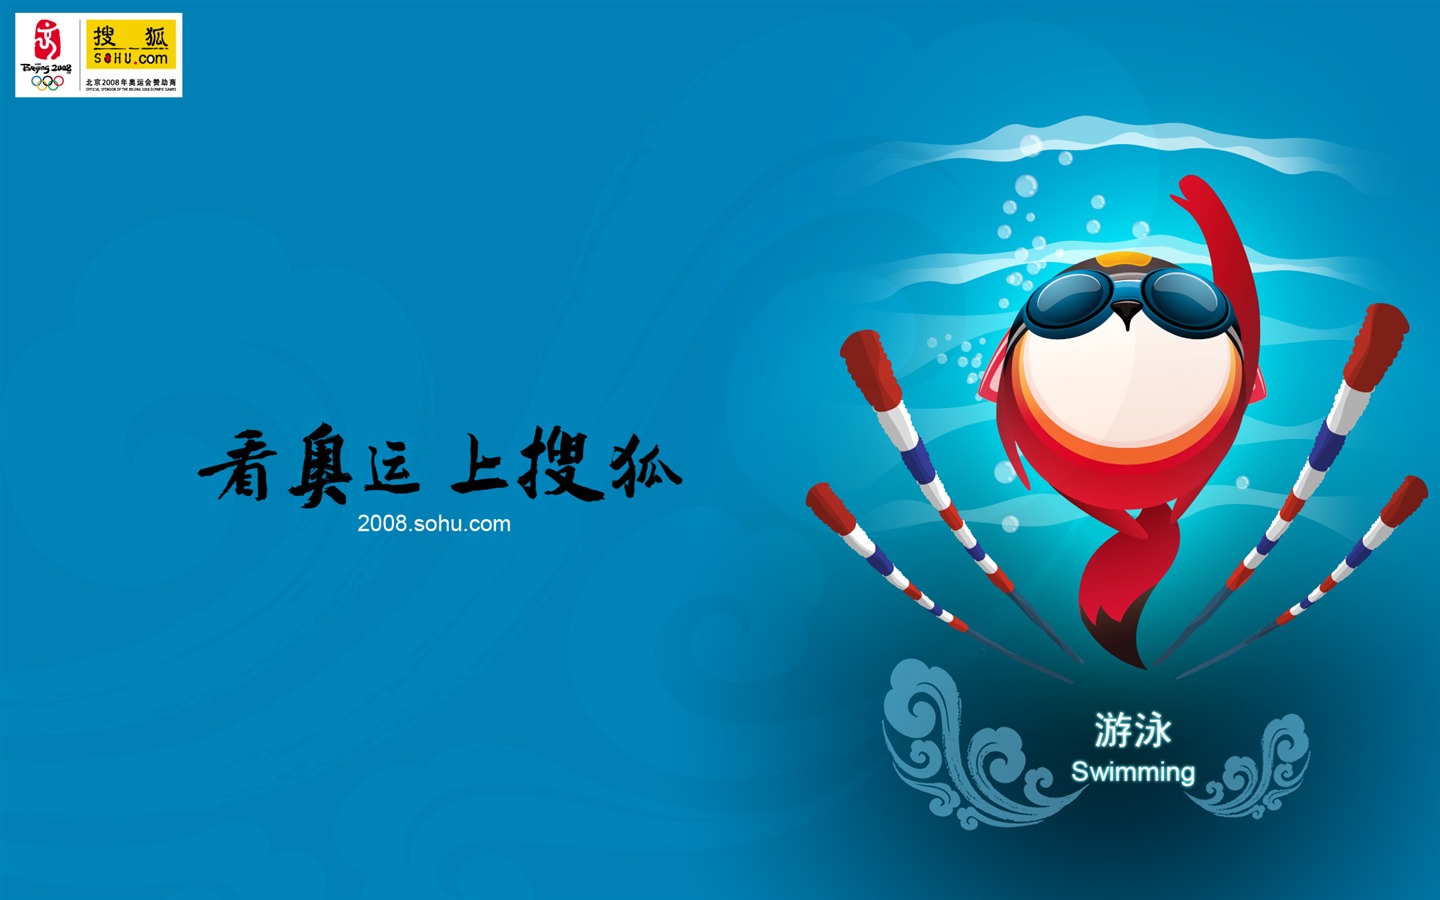 Sohu Olympic sports style wallpaper #26 - 1440x900